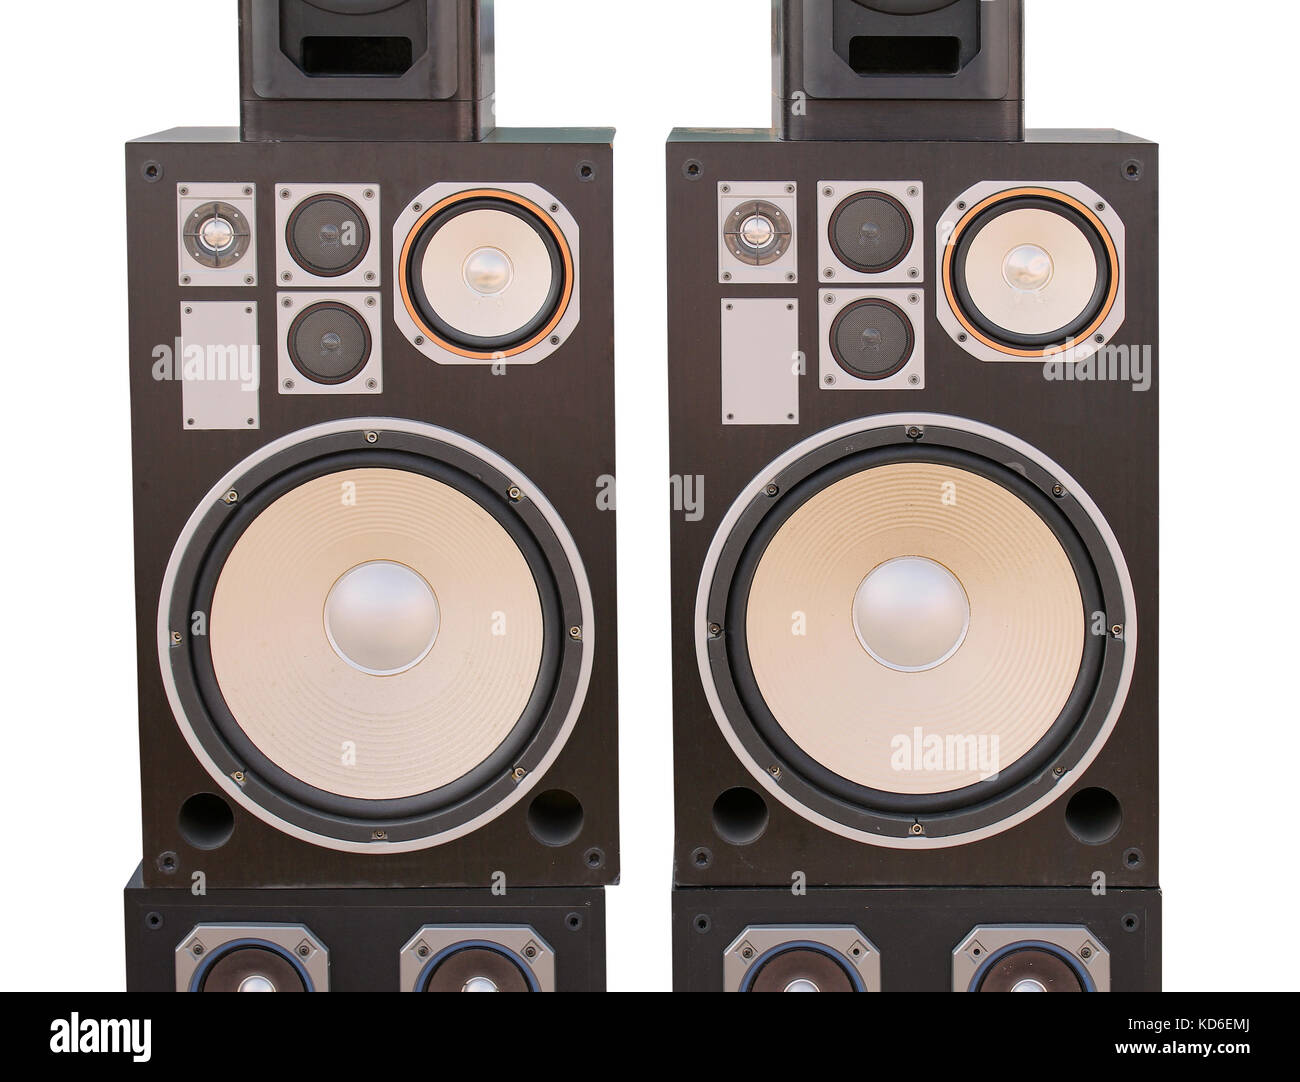 Professional audio equipment speakers isolated on white Stock Photo